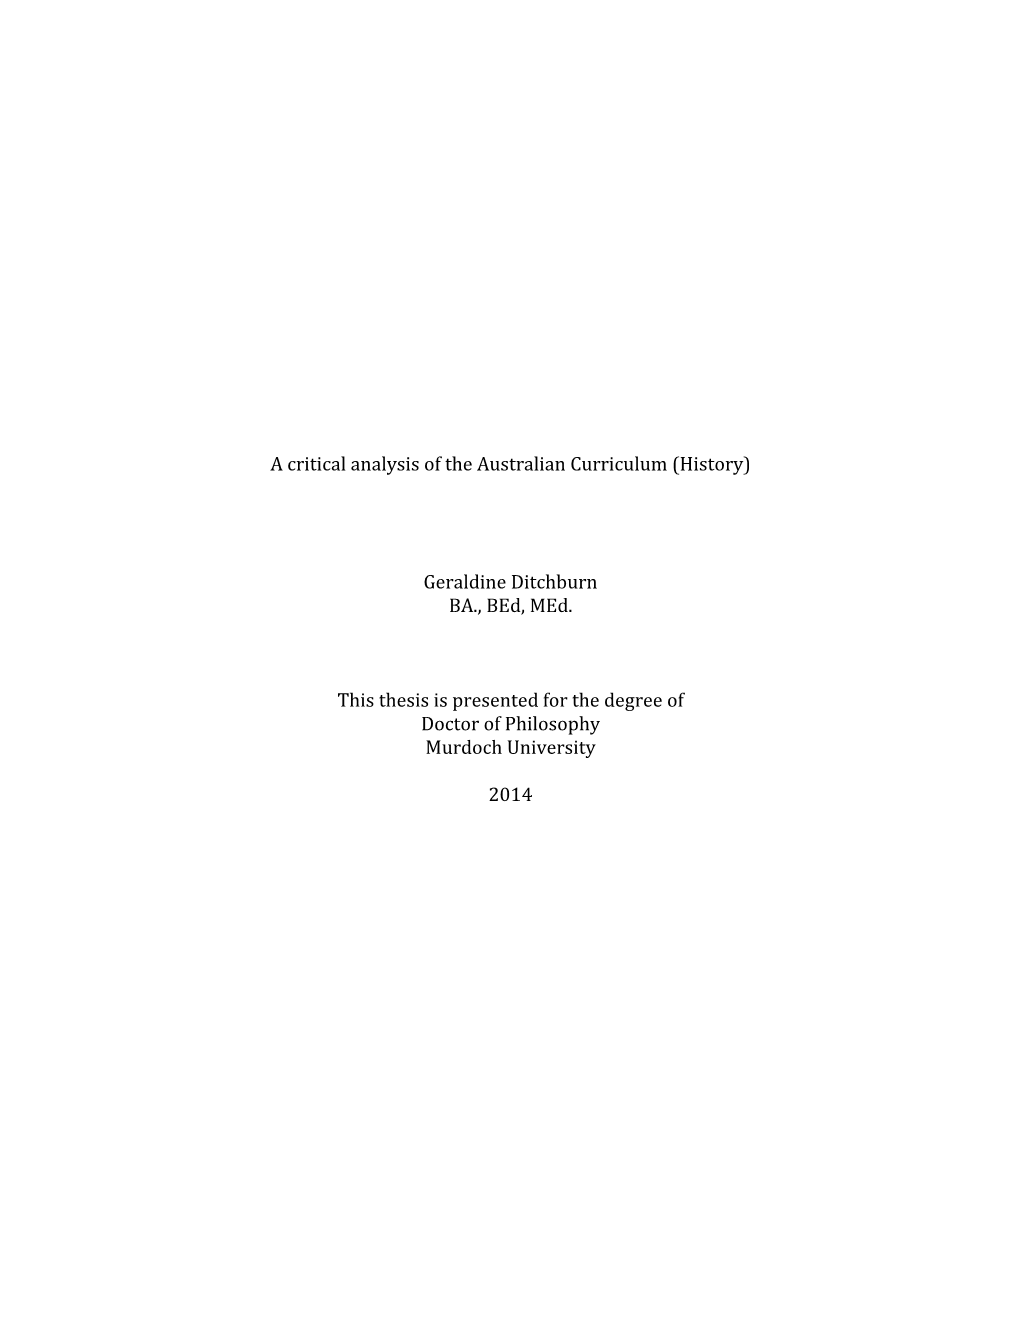 A Critical Analysis of the Australian Curriculum (History)